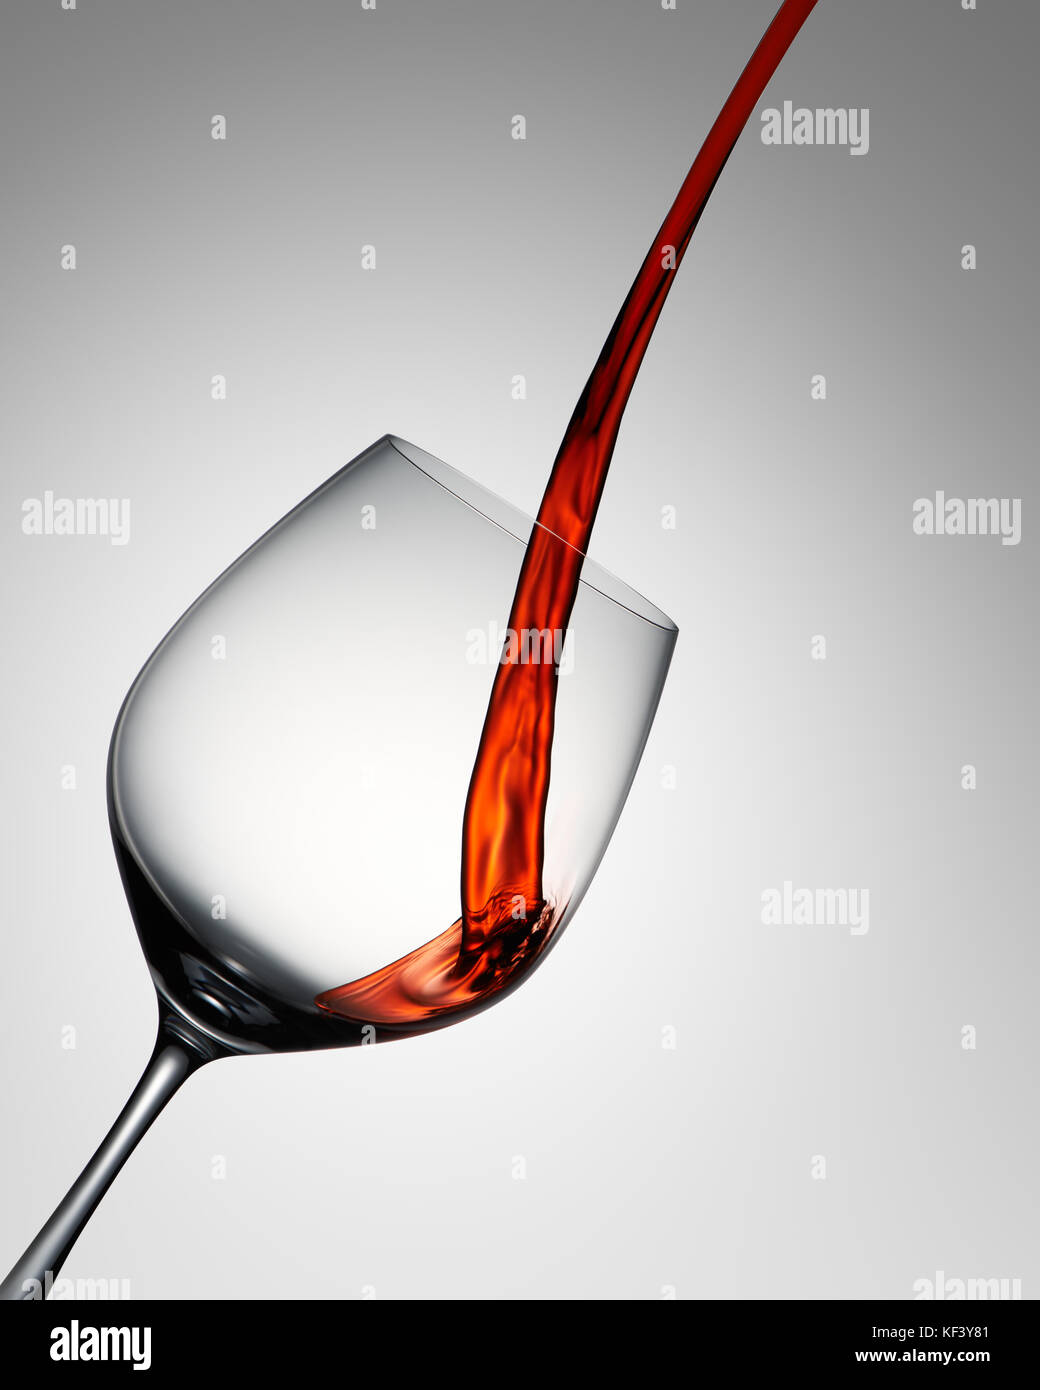 Red wine poured into elegant wine glass on grey gradient Stock Photo